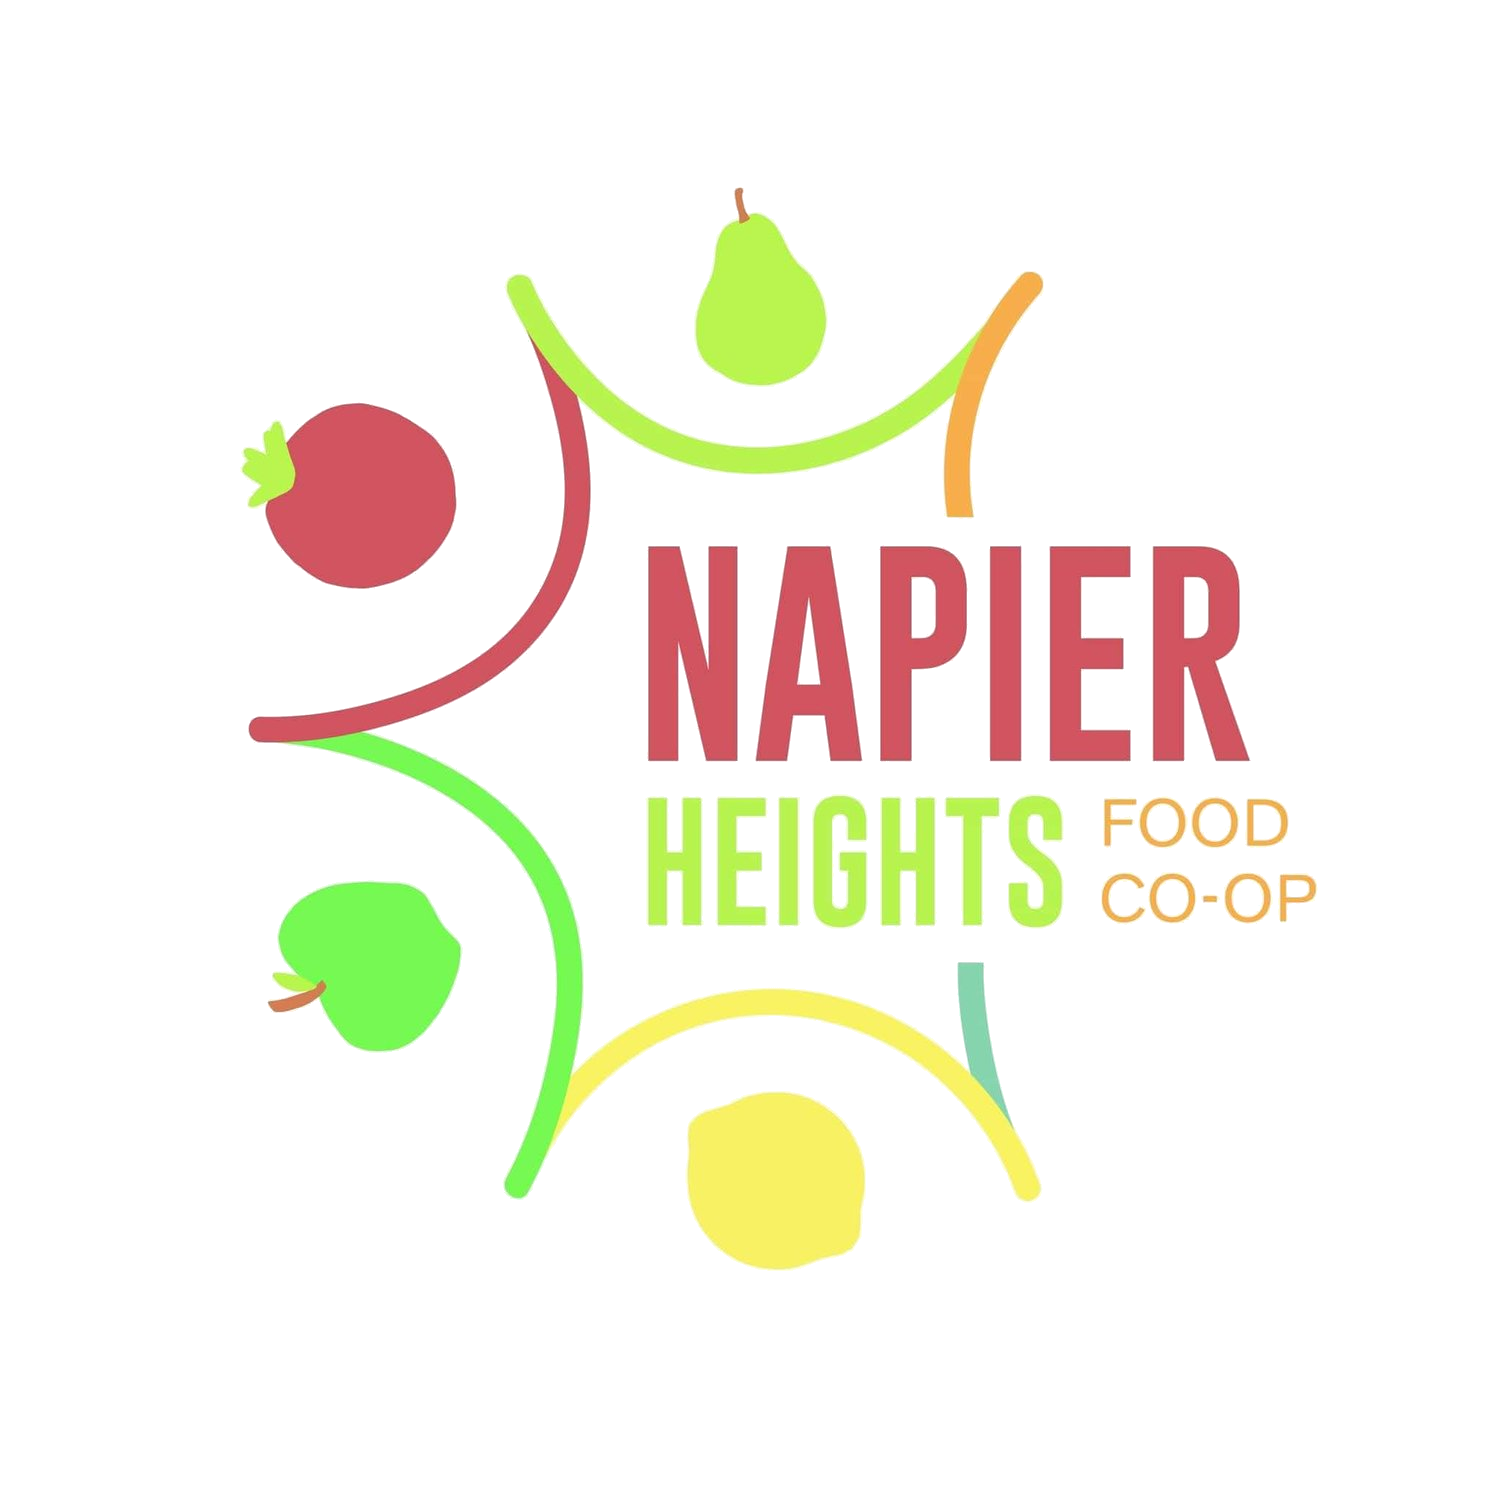 Napier Heights Market